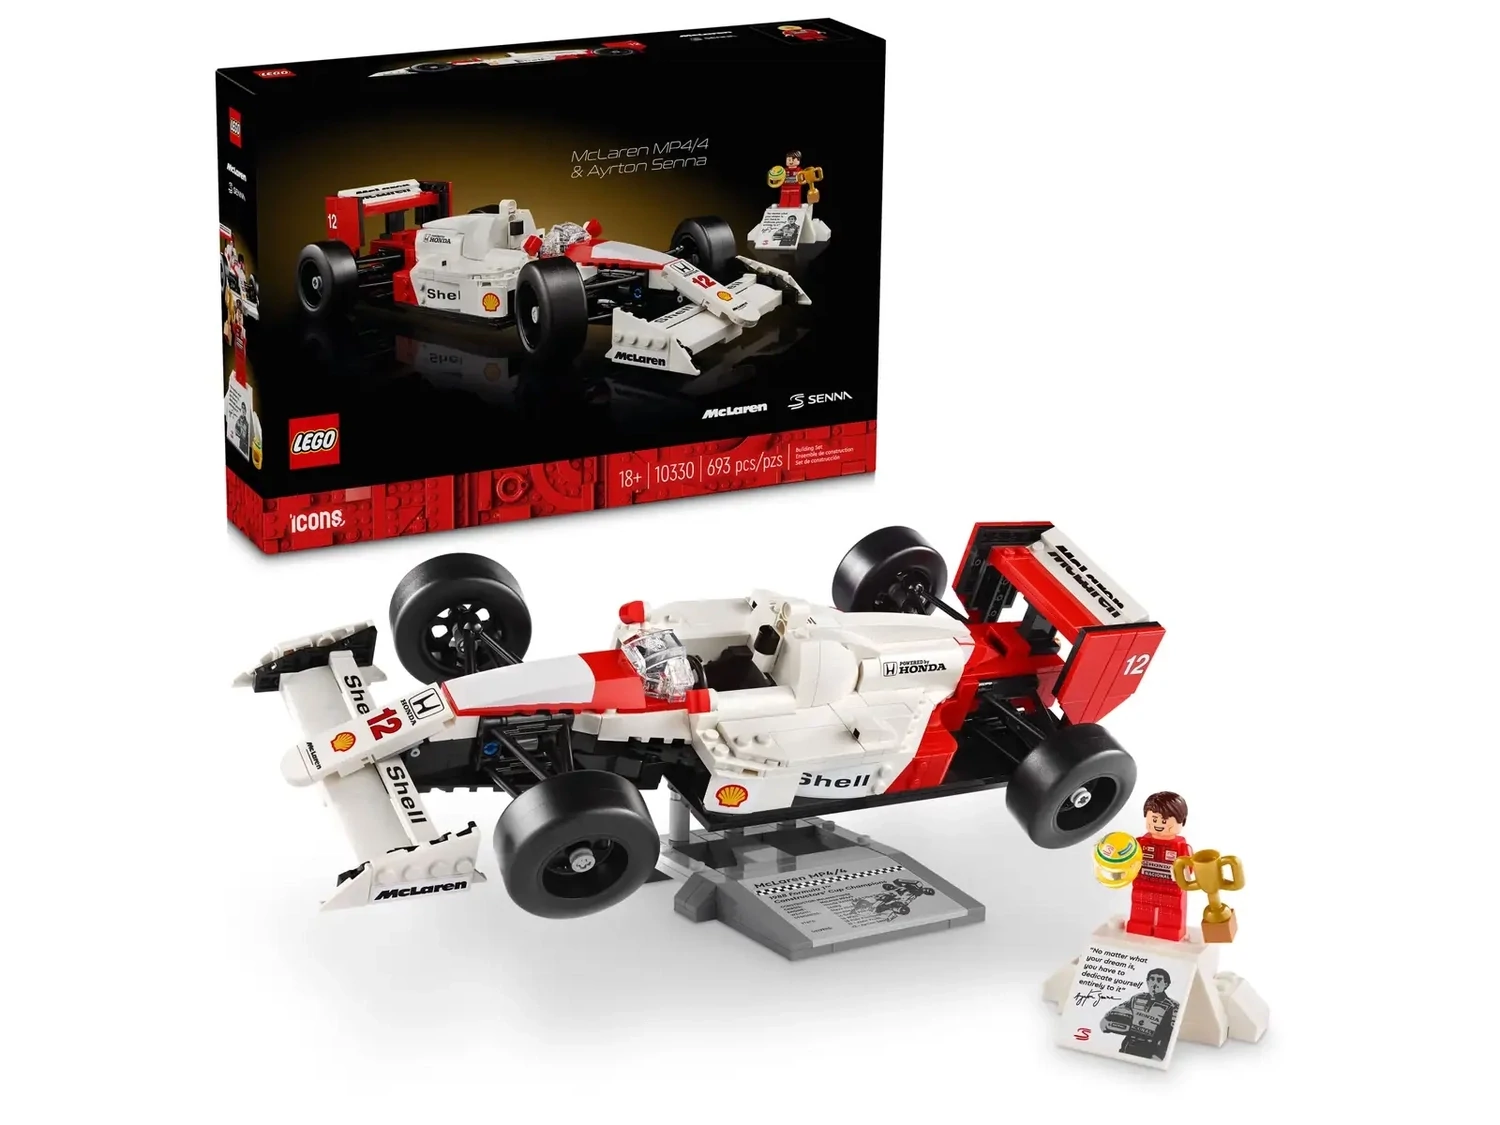 LEGO 10330 Technic McLaren MP4/4 &amp; Ayrton Senna